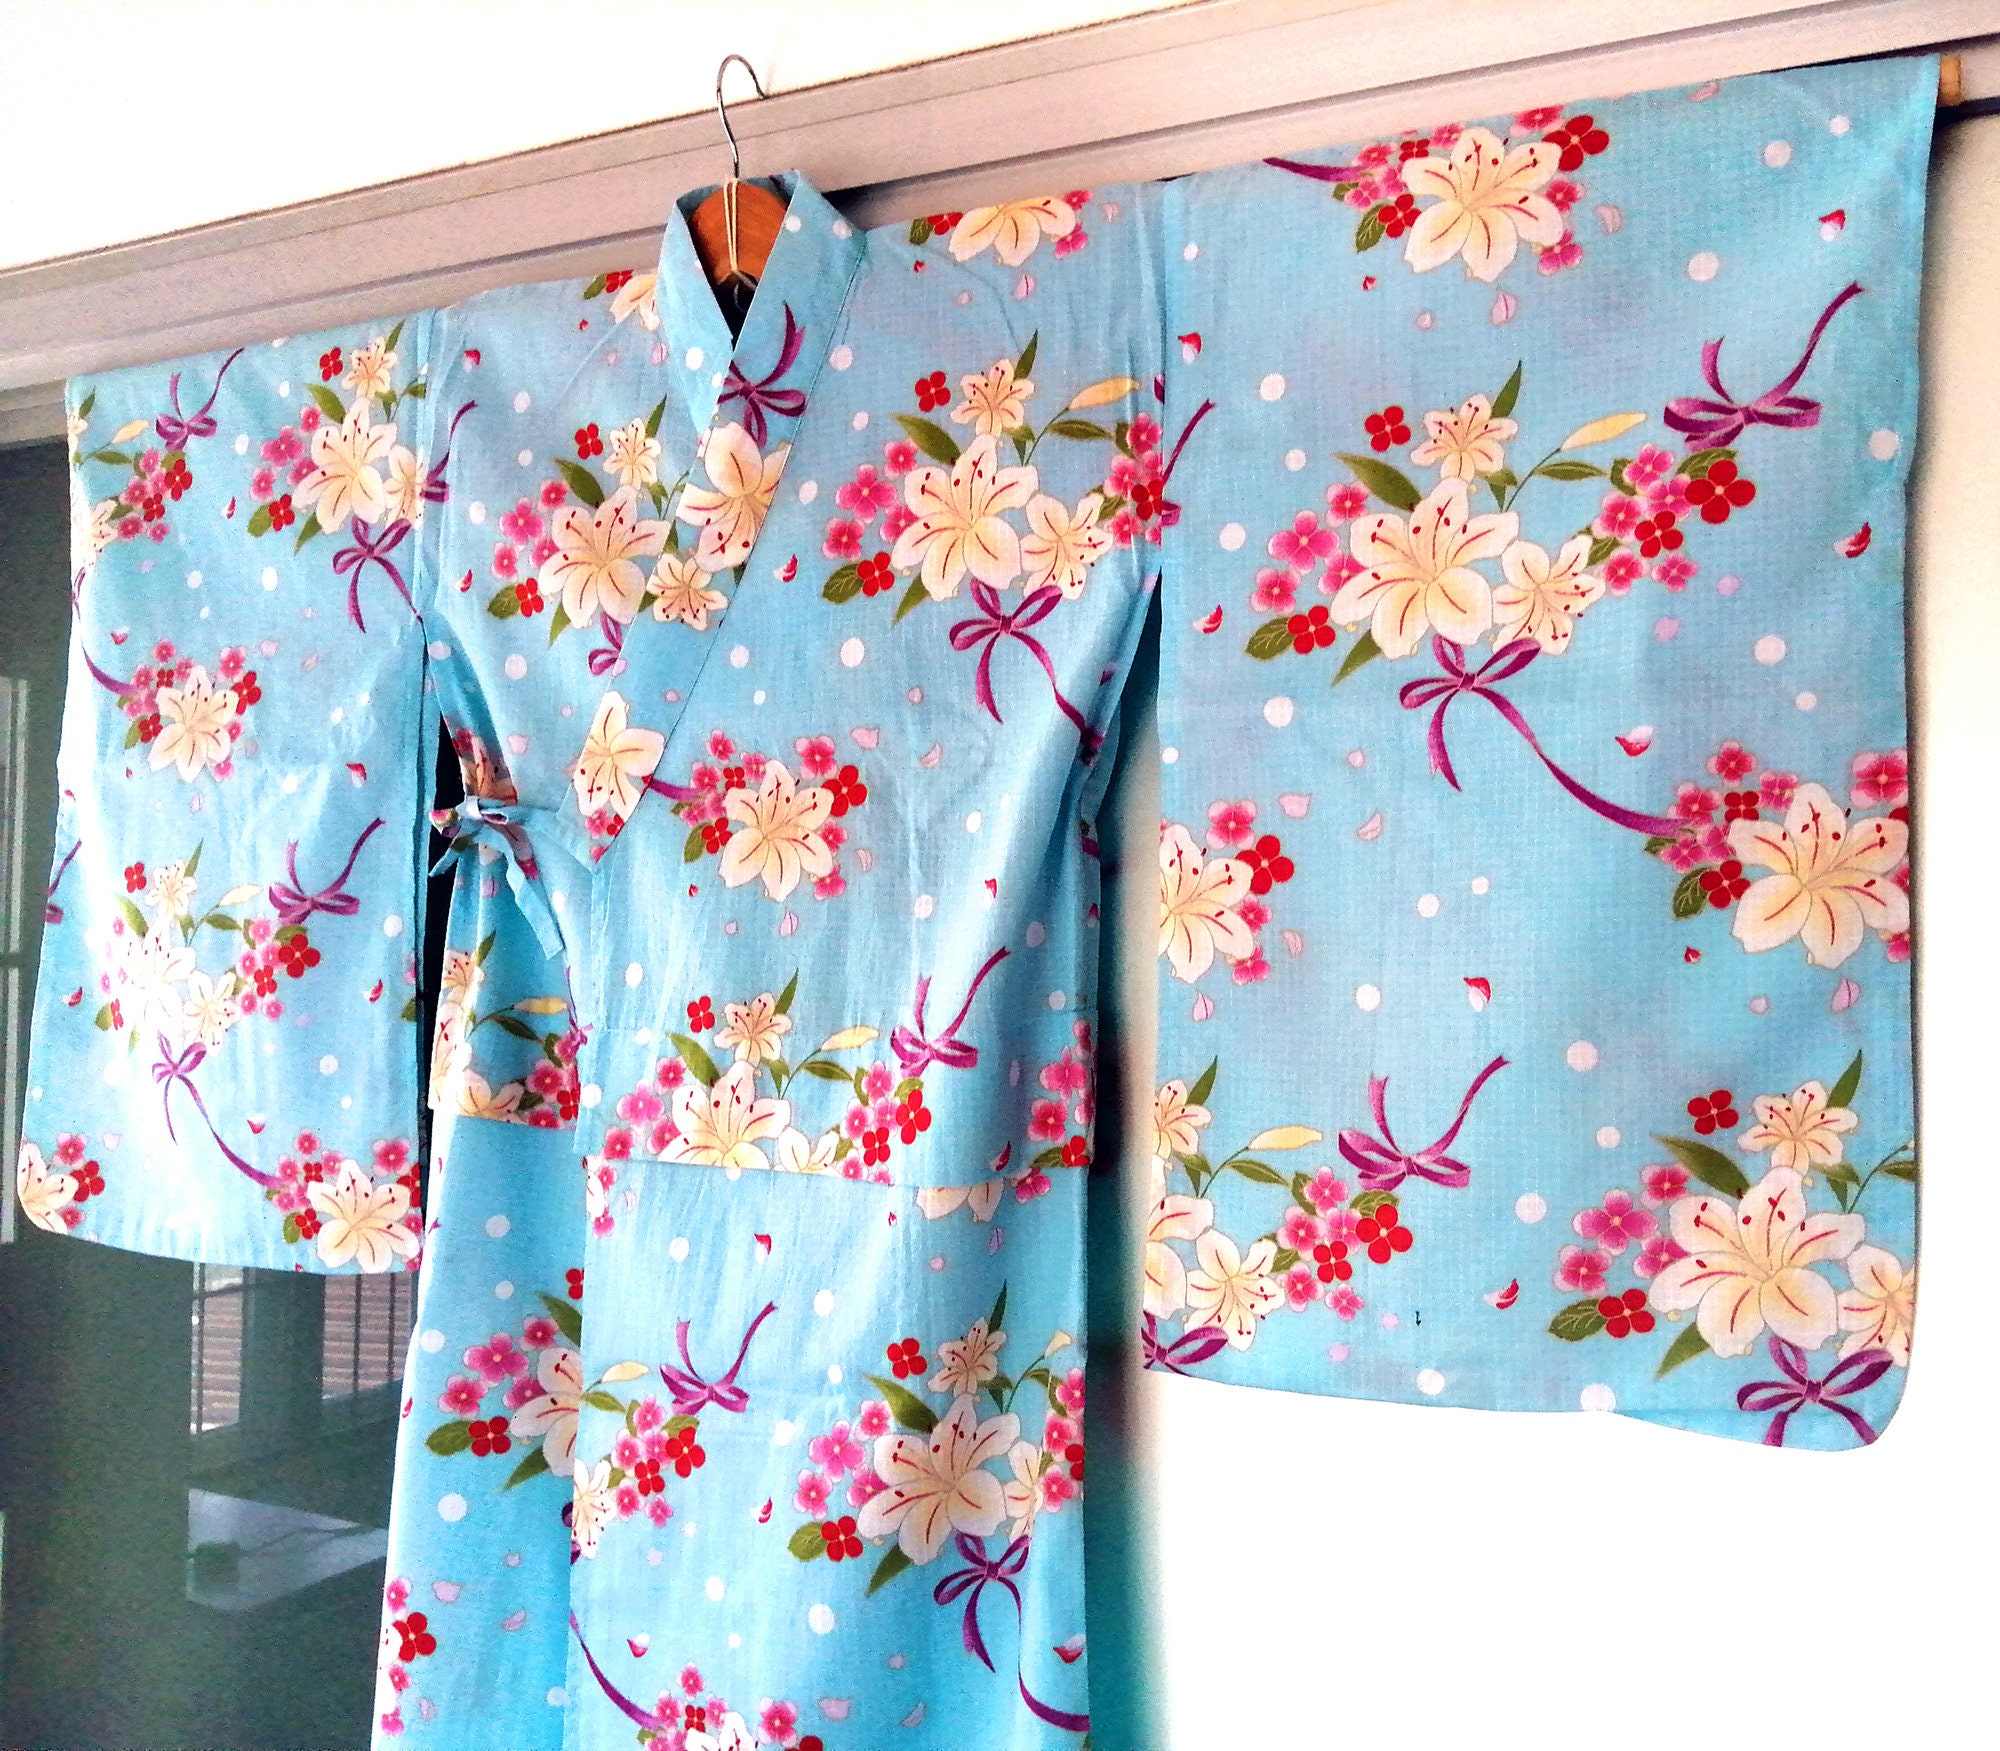  Men's Japanse Kimono Yukata Long Robe cotton (Large  size,60/Black Cloud) Halloween Costumes Sleepwear Nightgown Bathrobe Summer  Festivals Party Samurai Gifts for Christmas Birthdays Party Cosplay :  Clothing, Shoes & Jewelry